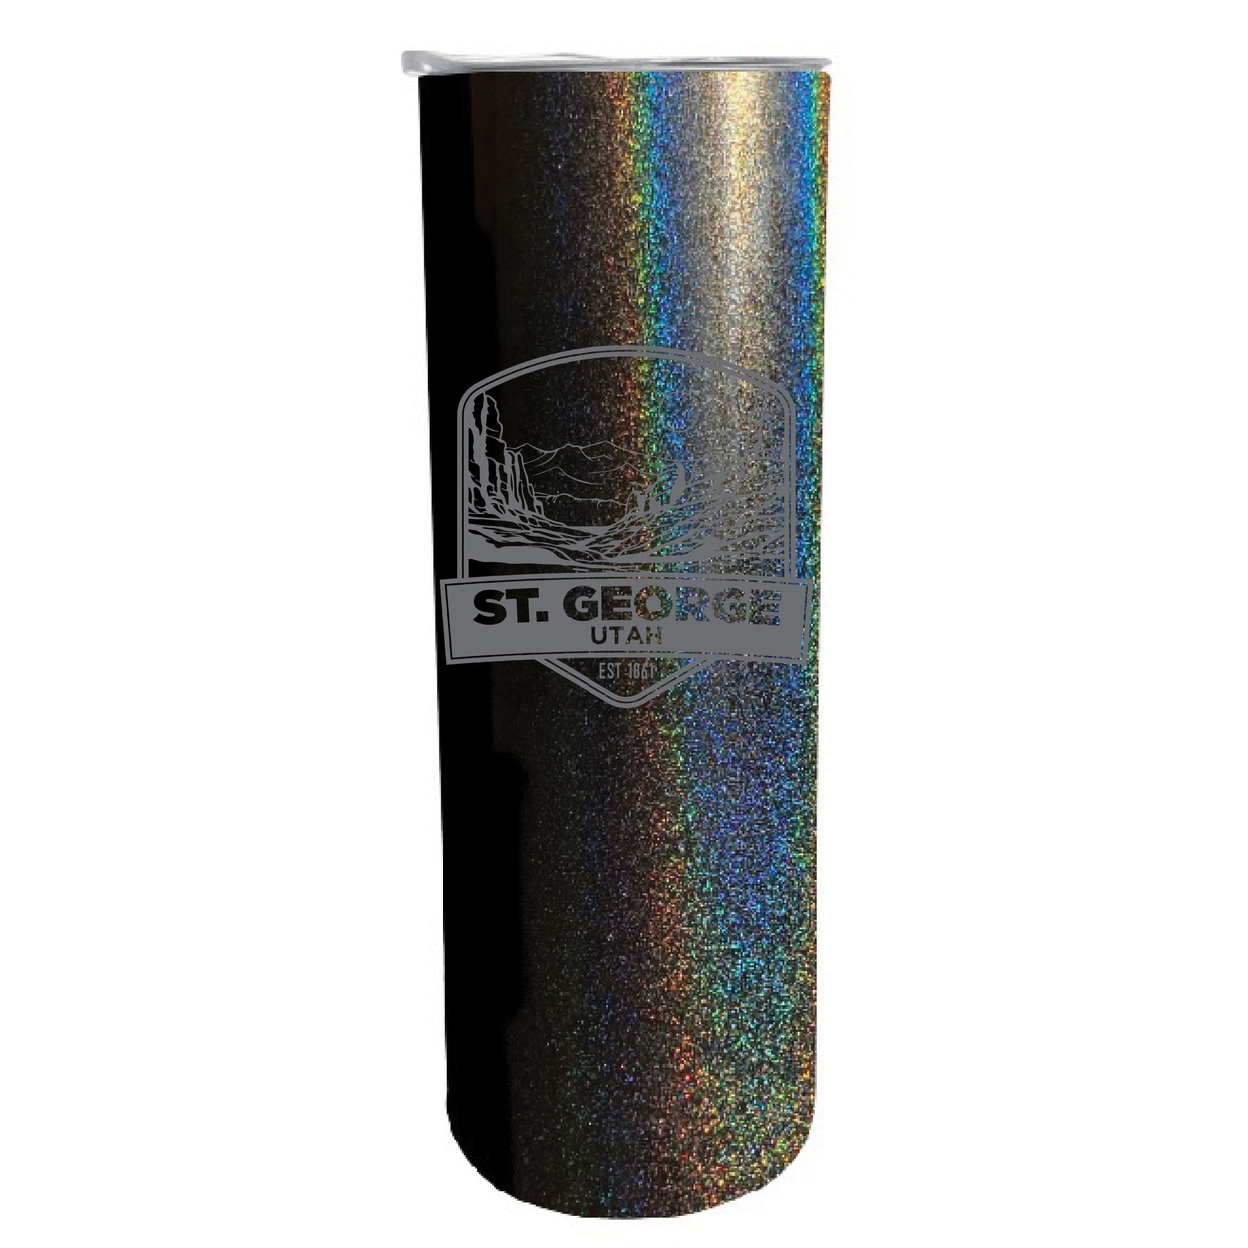 St. George Utah Souvenir 20 Oz Engraved Insulated Stainless Steel Skinny Tumbler - Black Glitter,,2-Pack